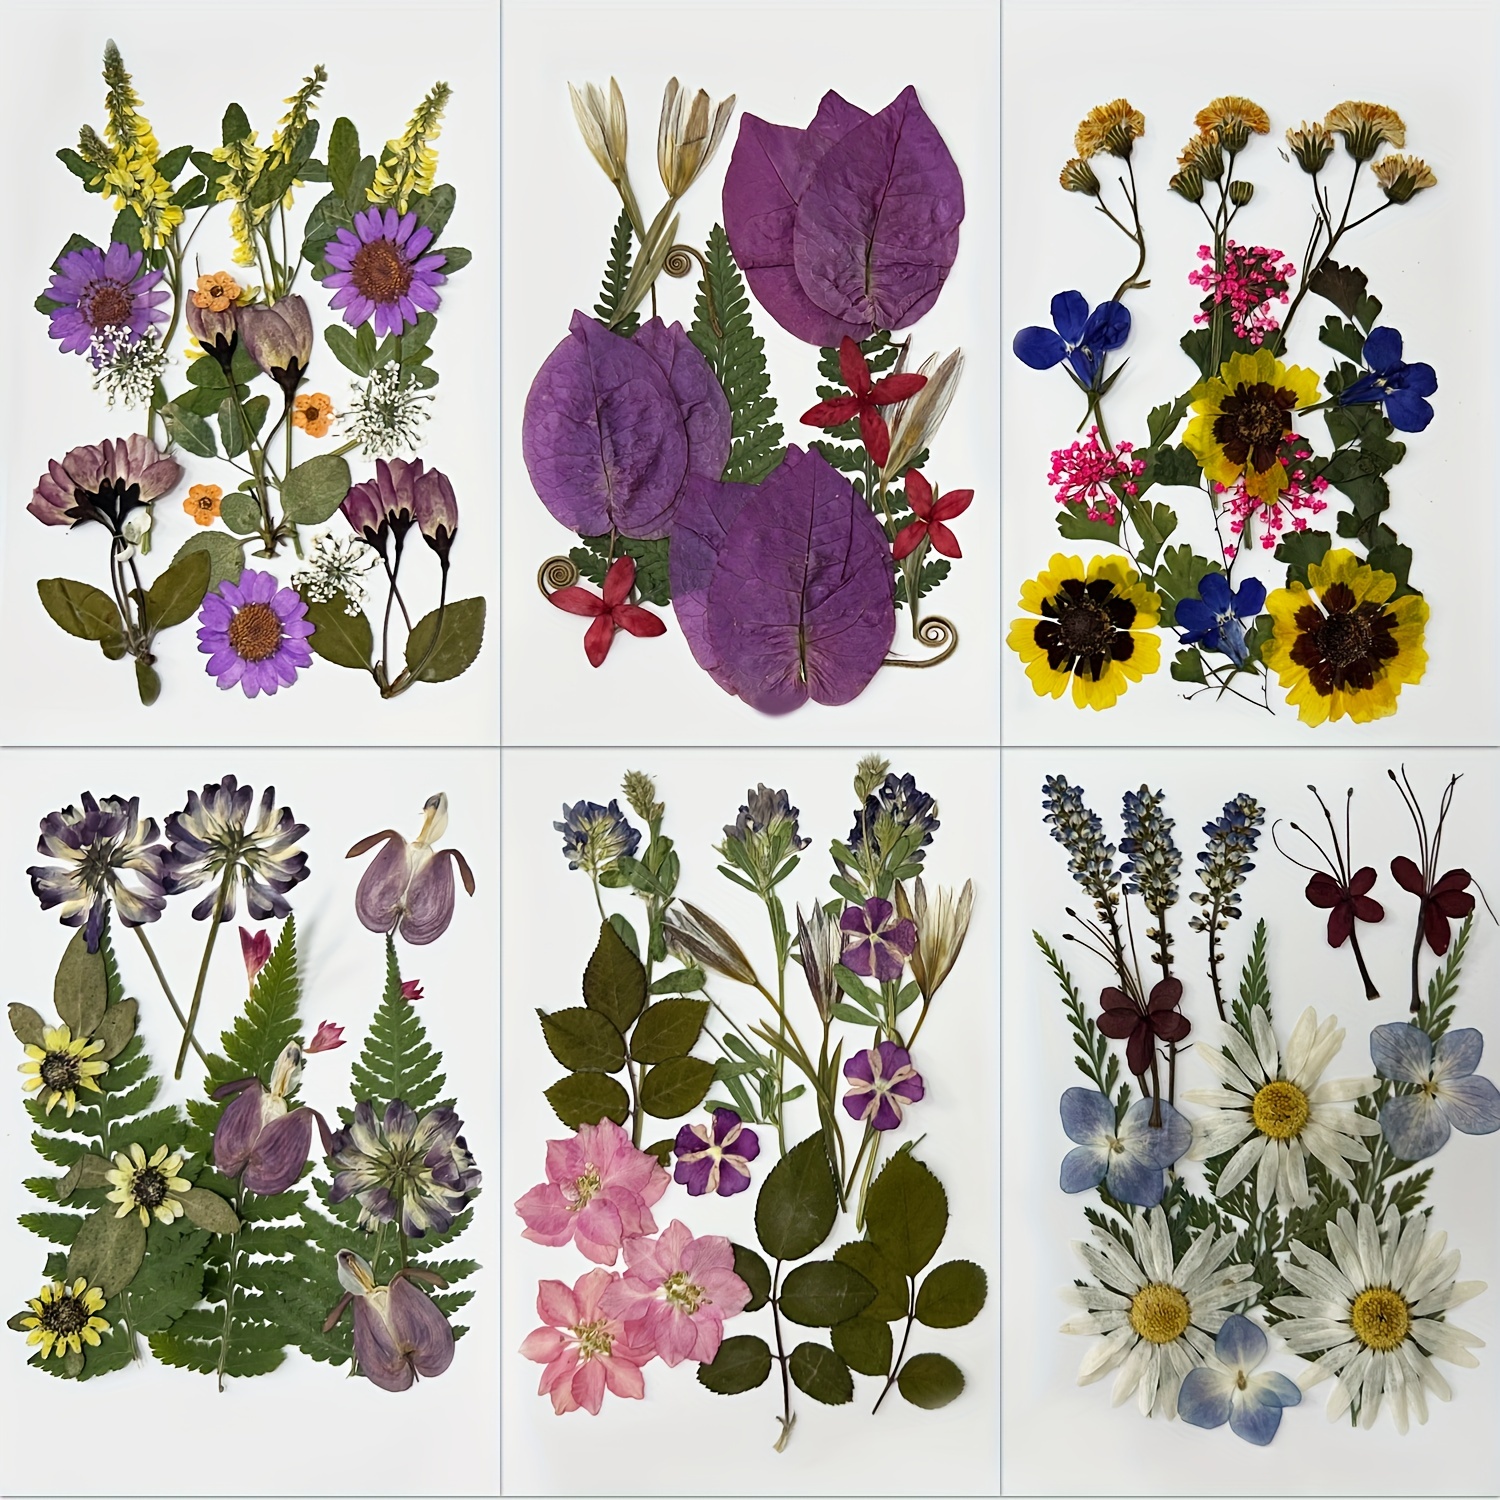 Get Floral With DIY Pressed Flower Crafts